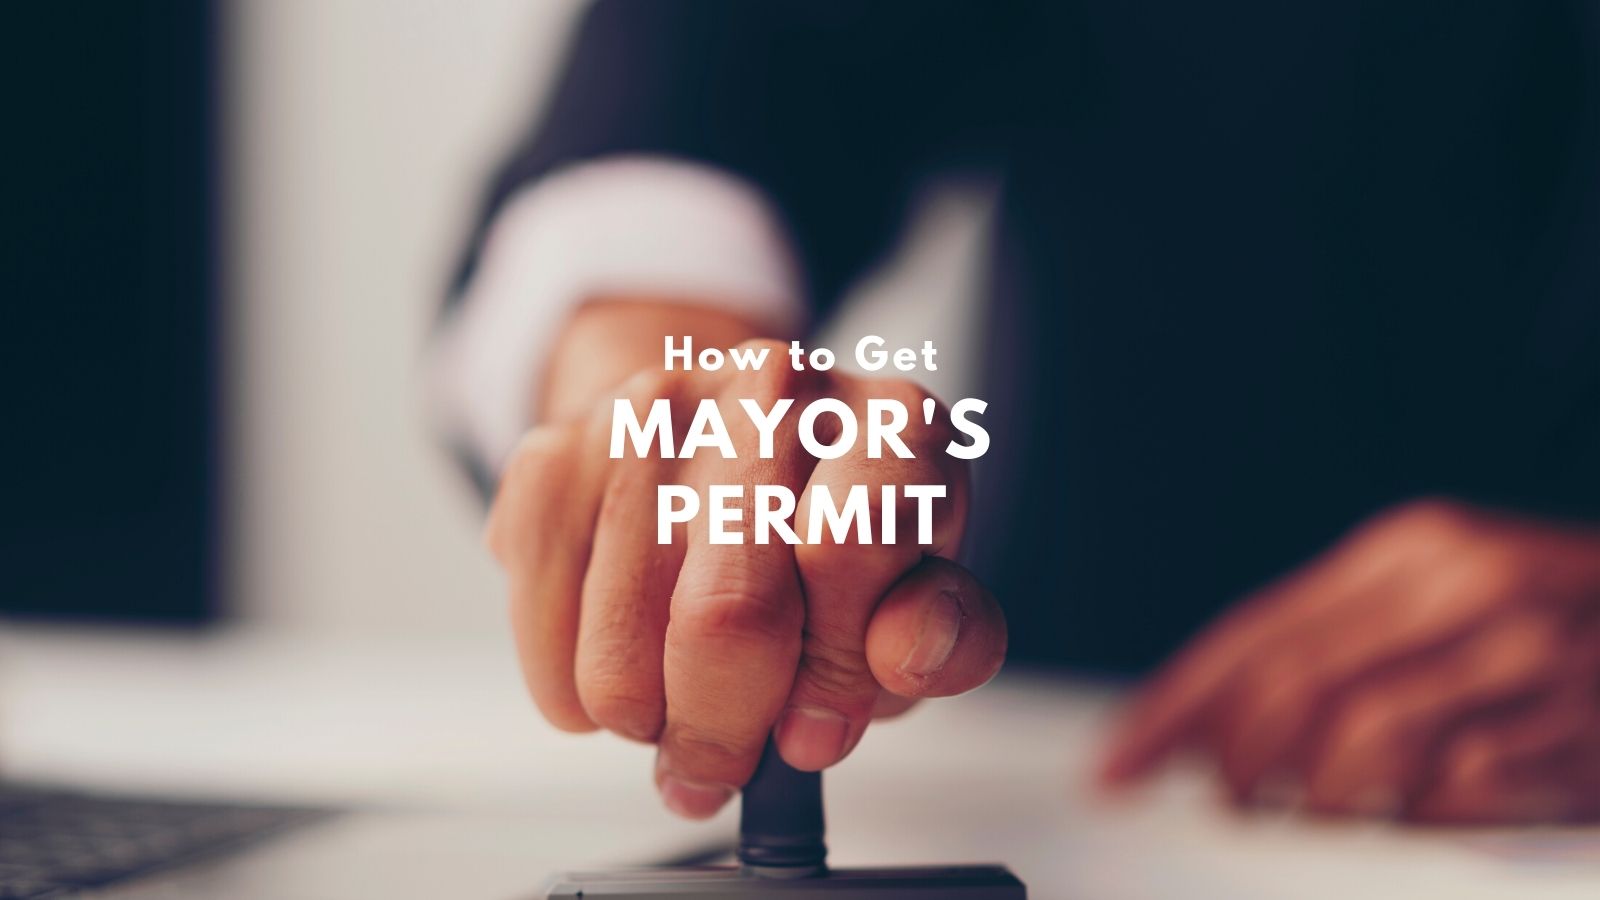 mayors permit requirements Philippines